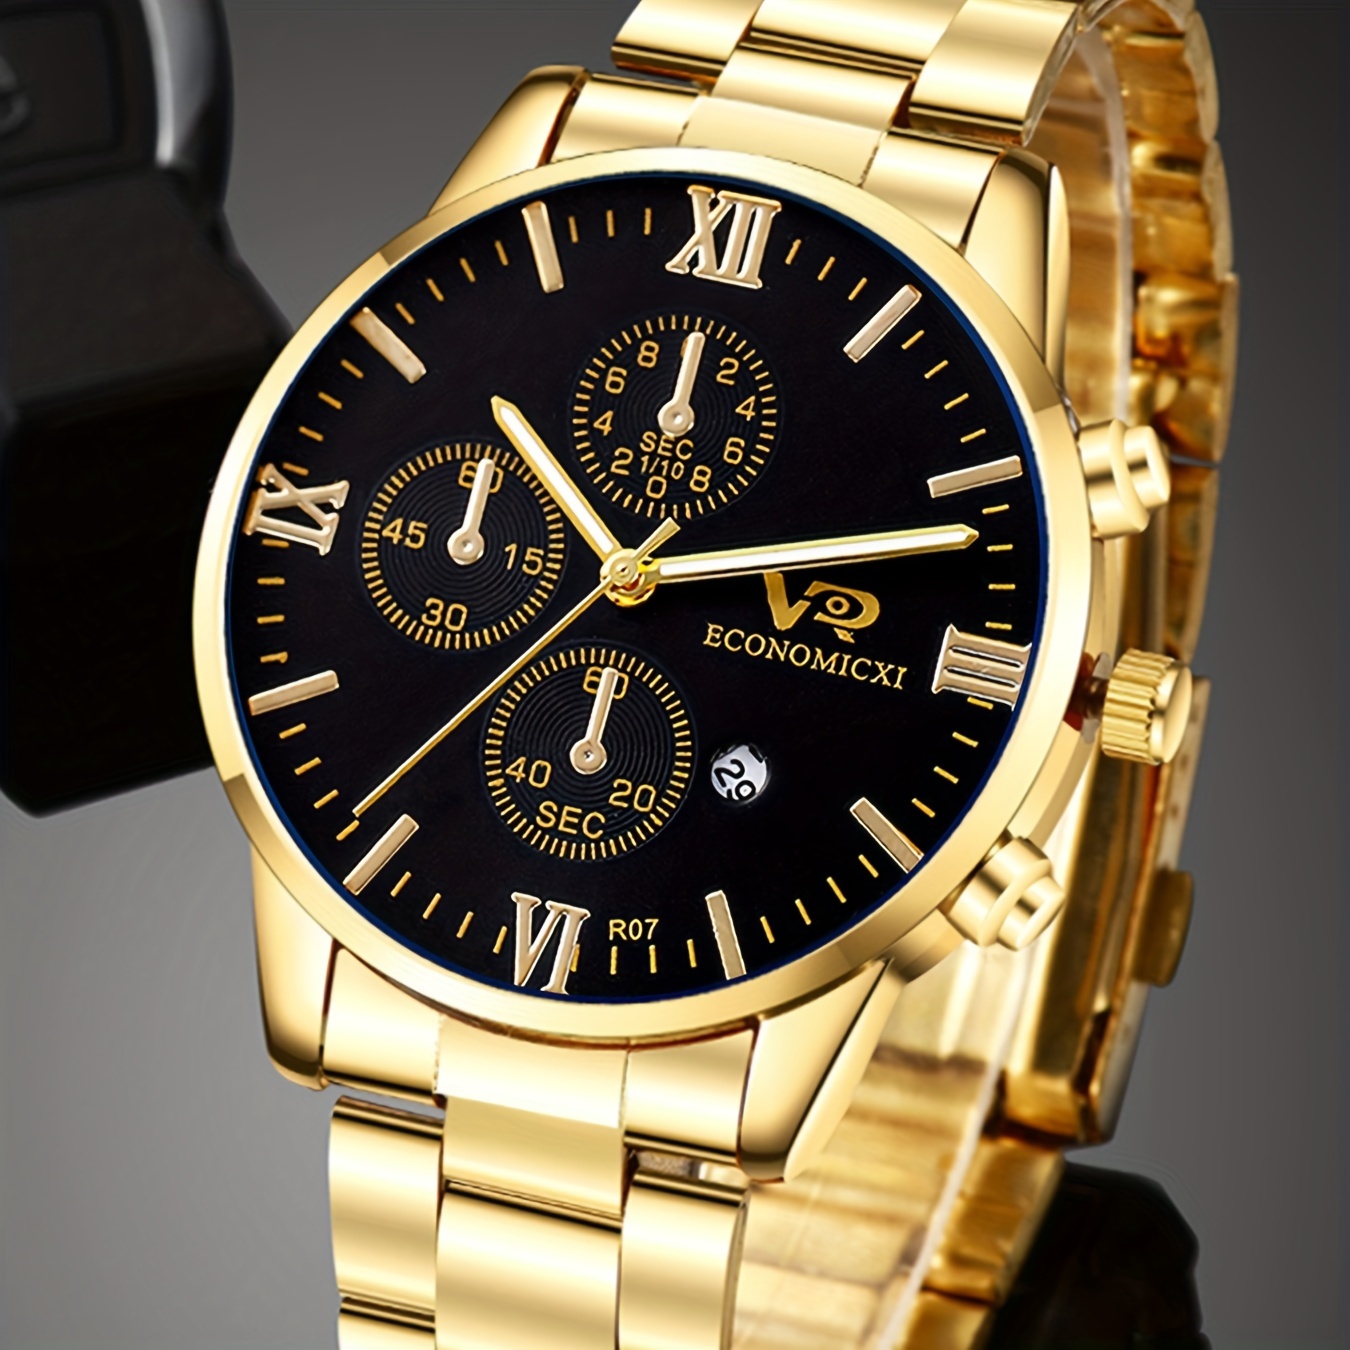 

Men's Business Leisure Quartz Watch Luxury Date Dial Roman Numerals Fashion Male's Wrist Watch